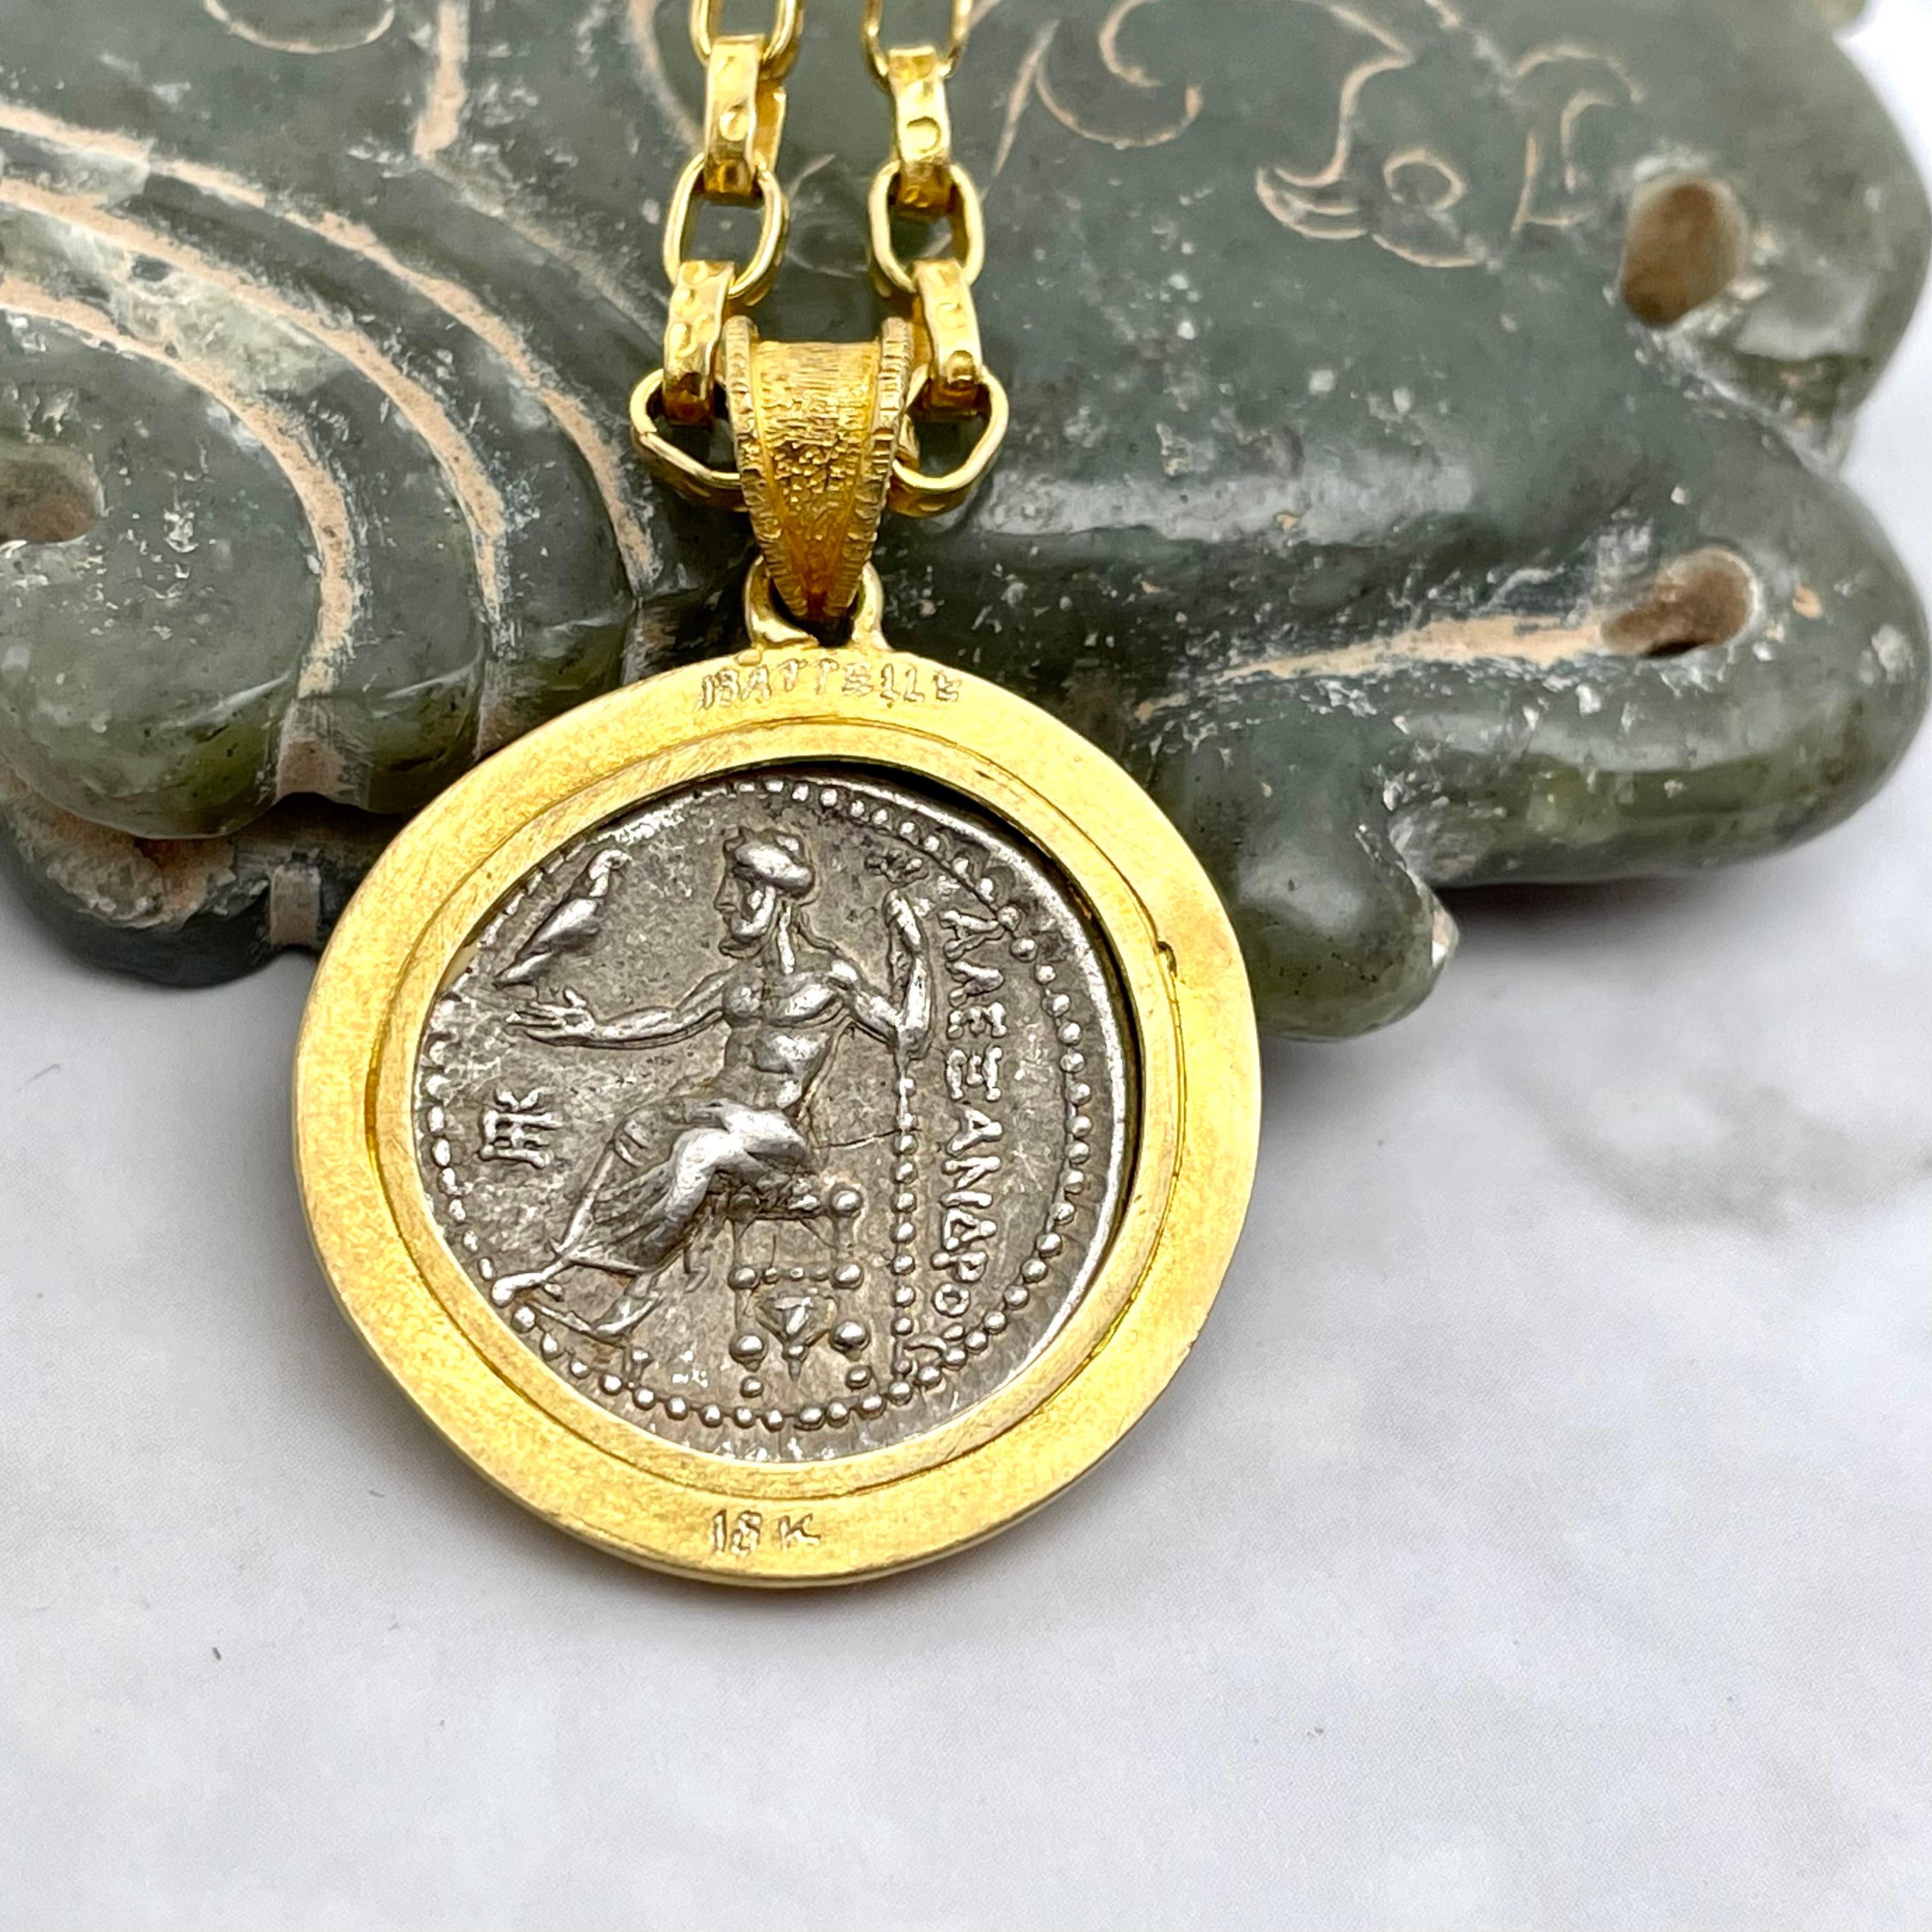 Pendentif en or 18 carats représentant Alexander la Grande pièce de la Grèce antique, 4e siècle avant J.-C. Neuf - En vente à Soquel, CA